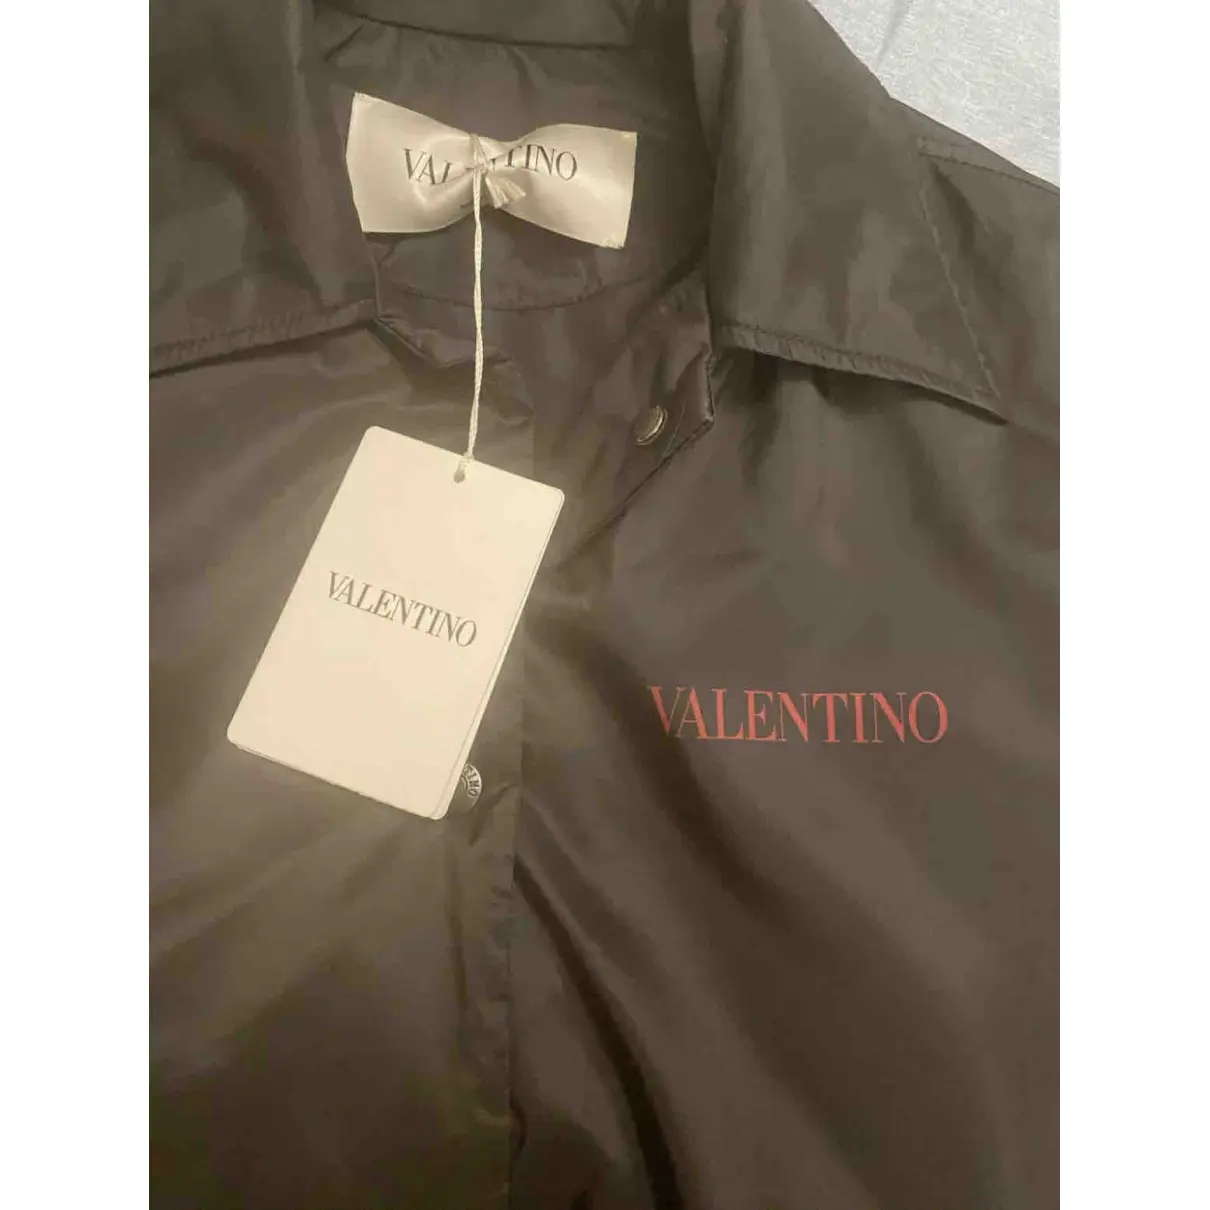 Buy Valentino Garavani Jacket online